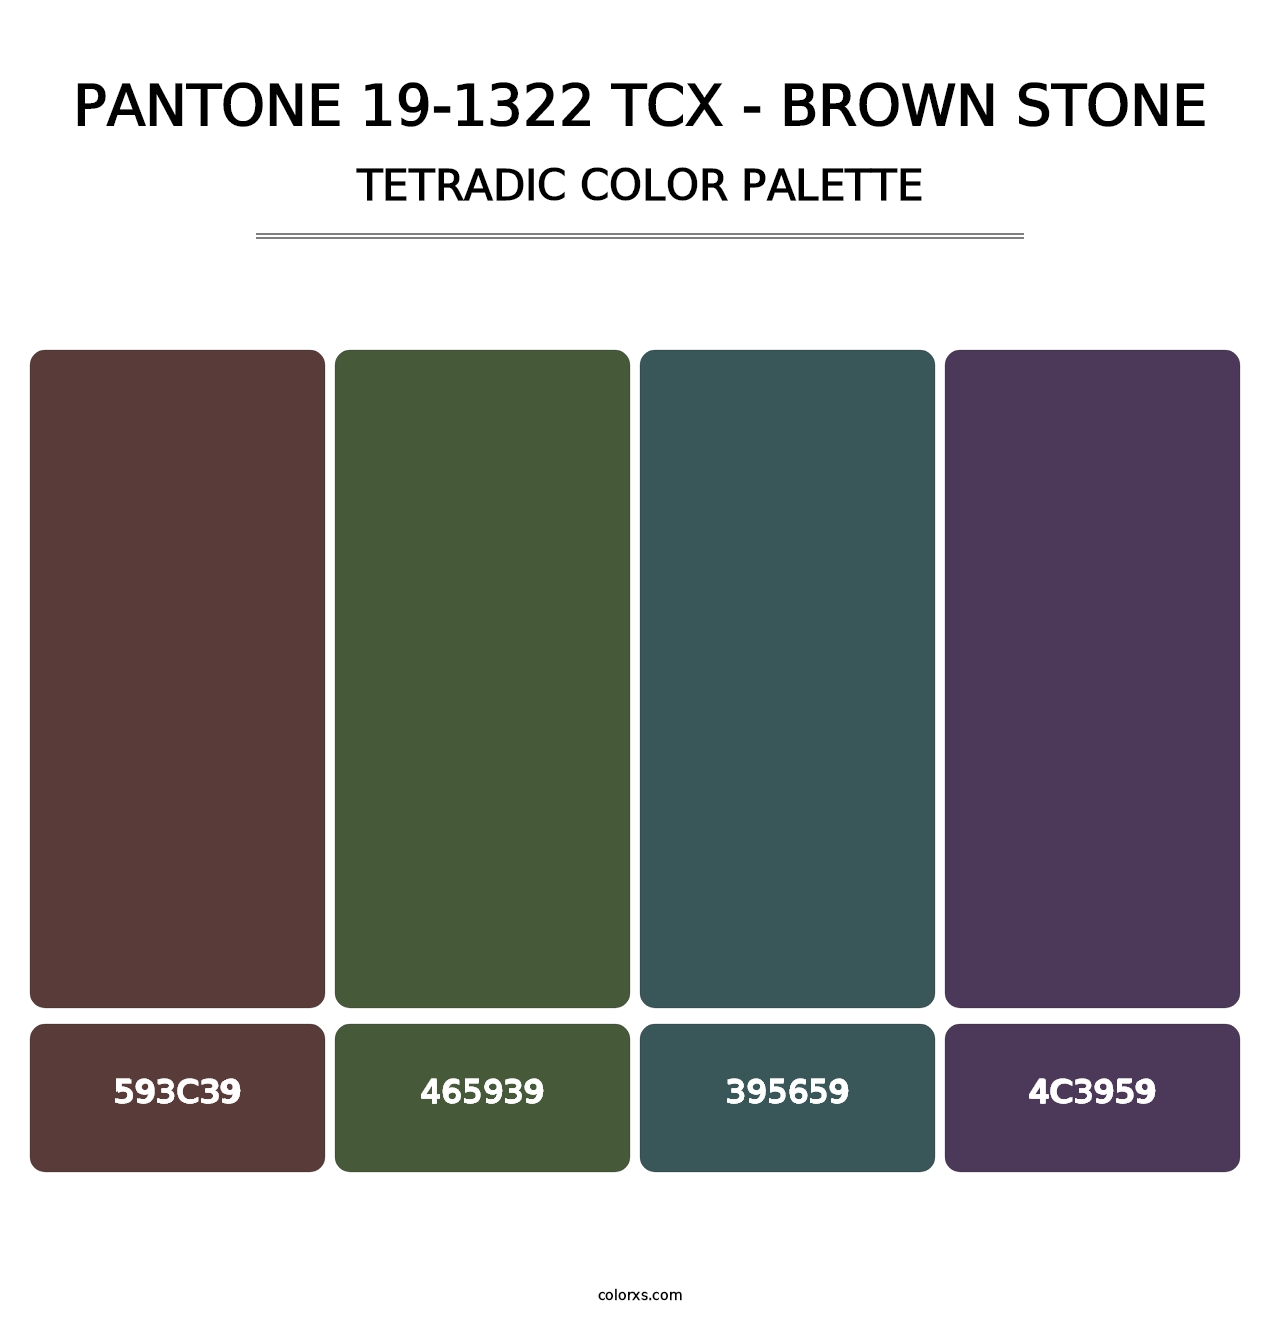 PANTONE 19-1322 TCX - Brown Stone - Tetradic Color Palette